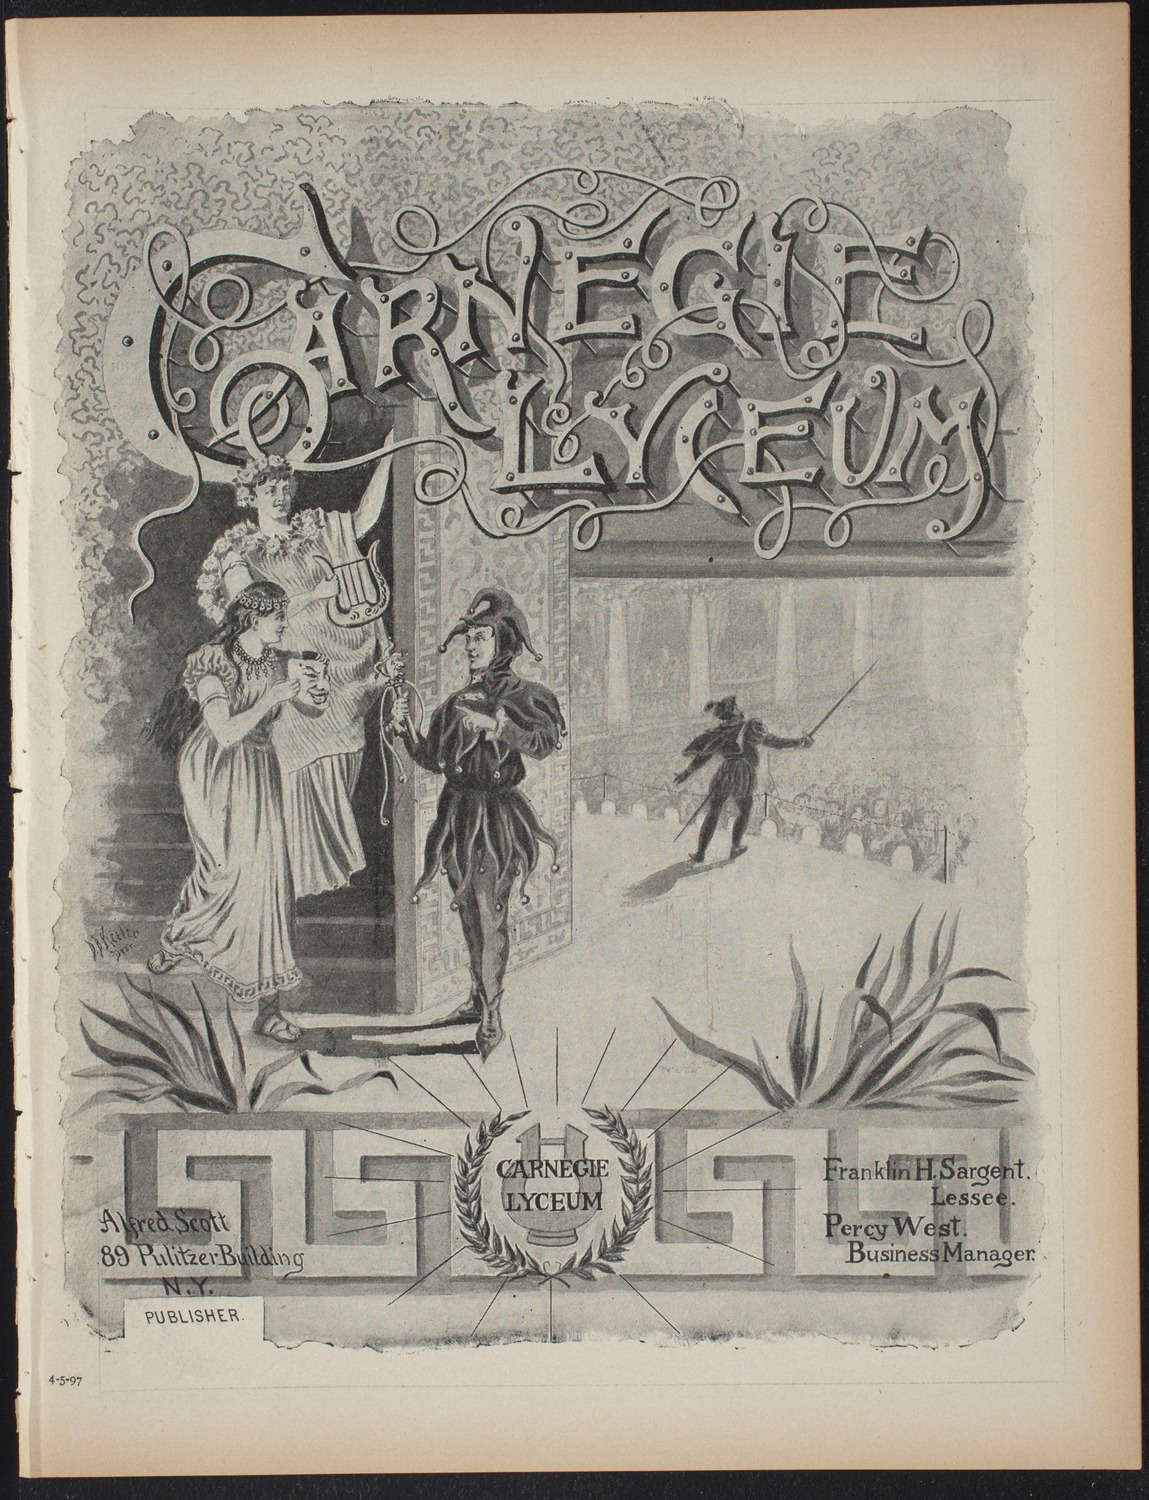 Amherst College Musical Association: Glee, Banjo, and Mandolin Clubs, April 5, 1897, program page 1